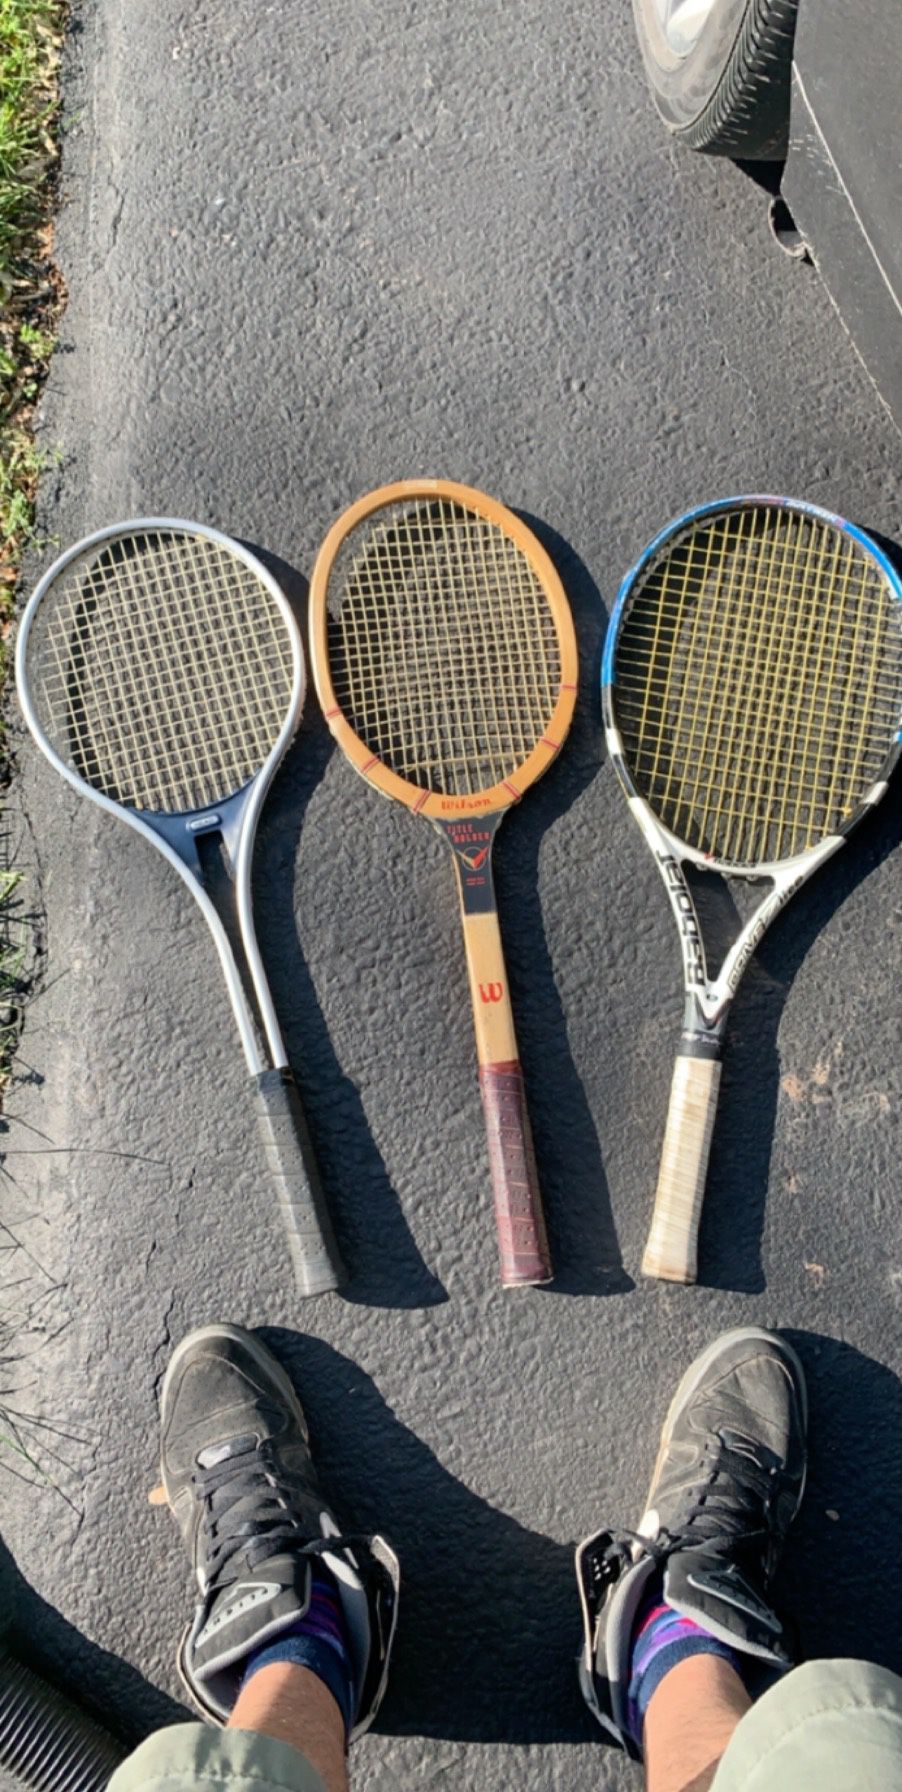 Professional name brand tennis rackets